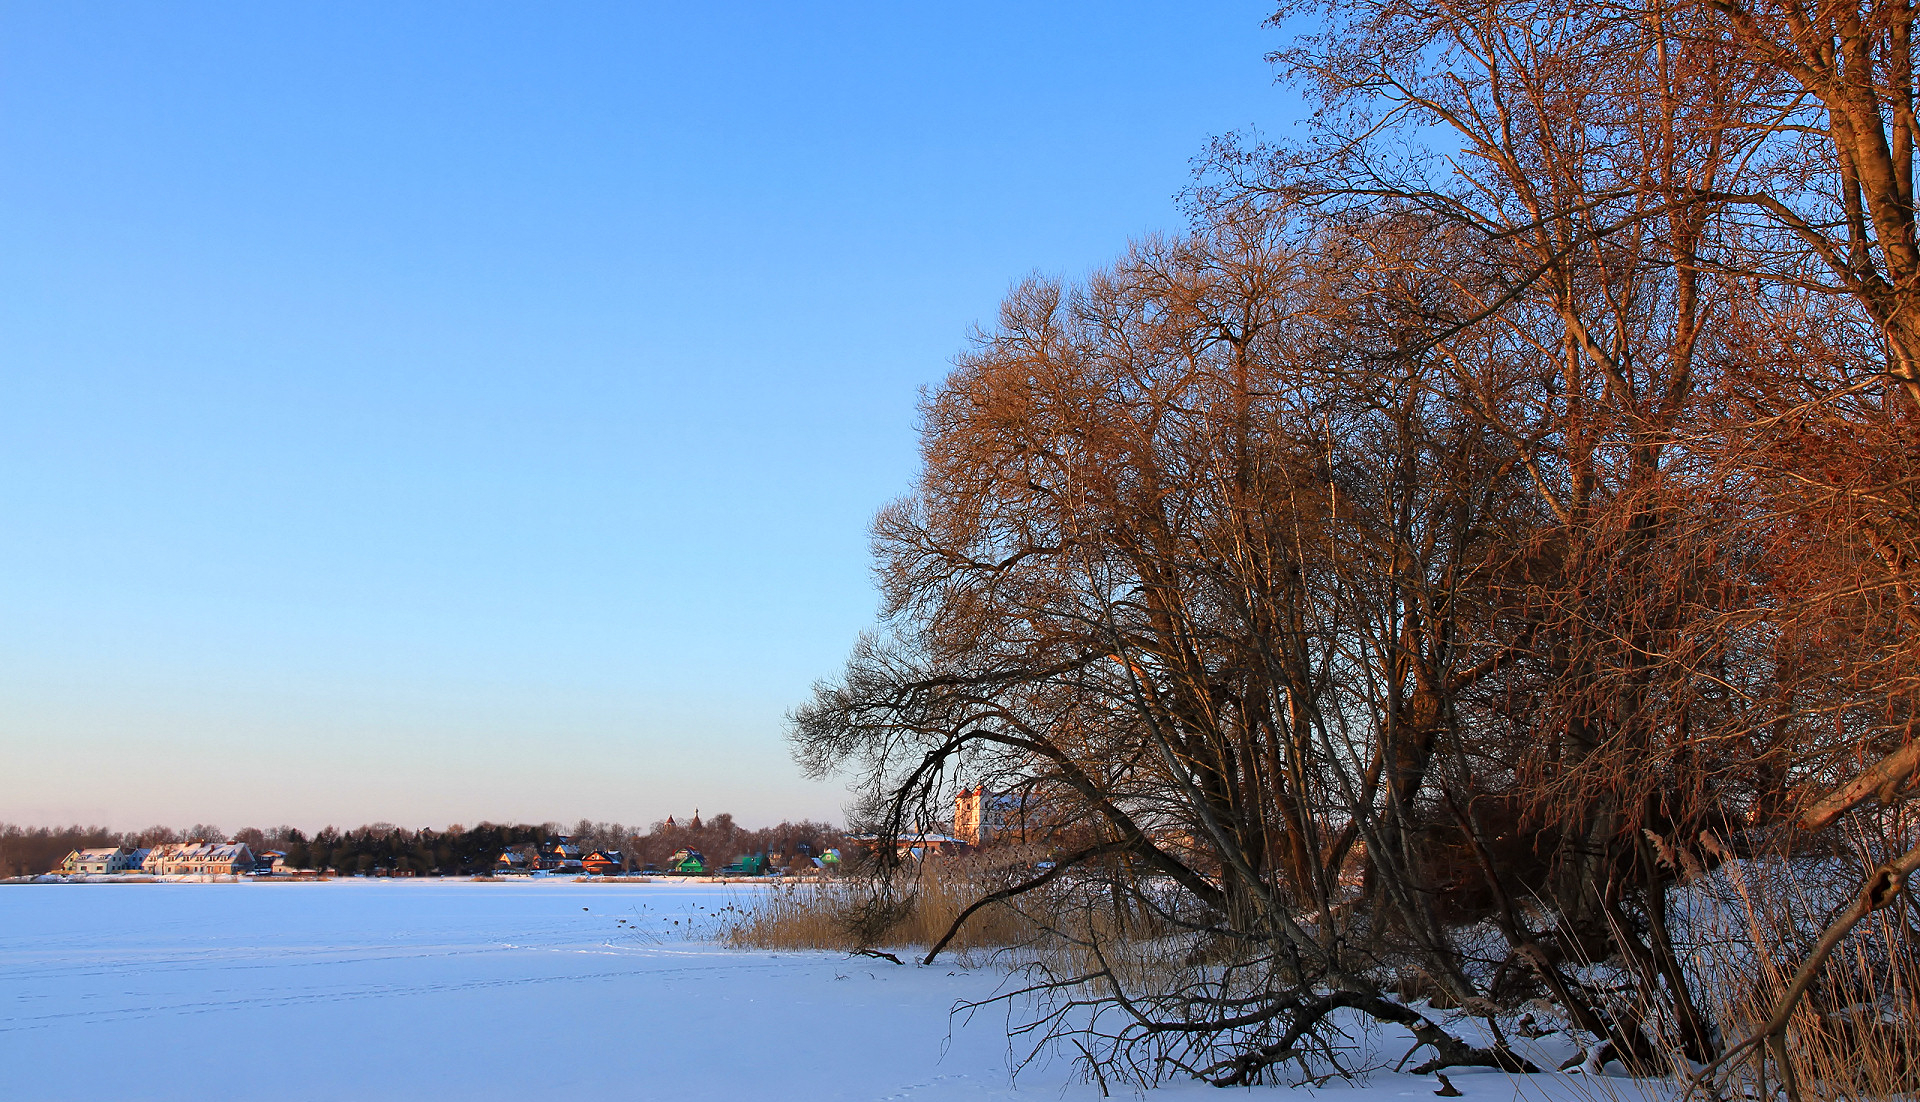 Winter landscape in Trakai, a scenic desktop wallpaper.